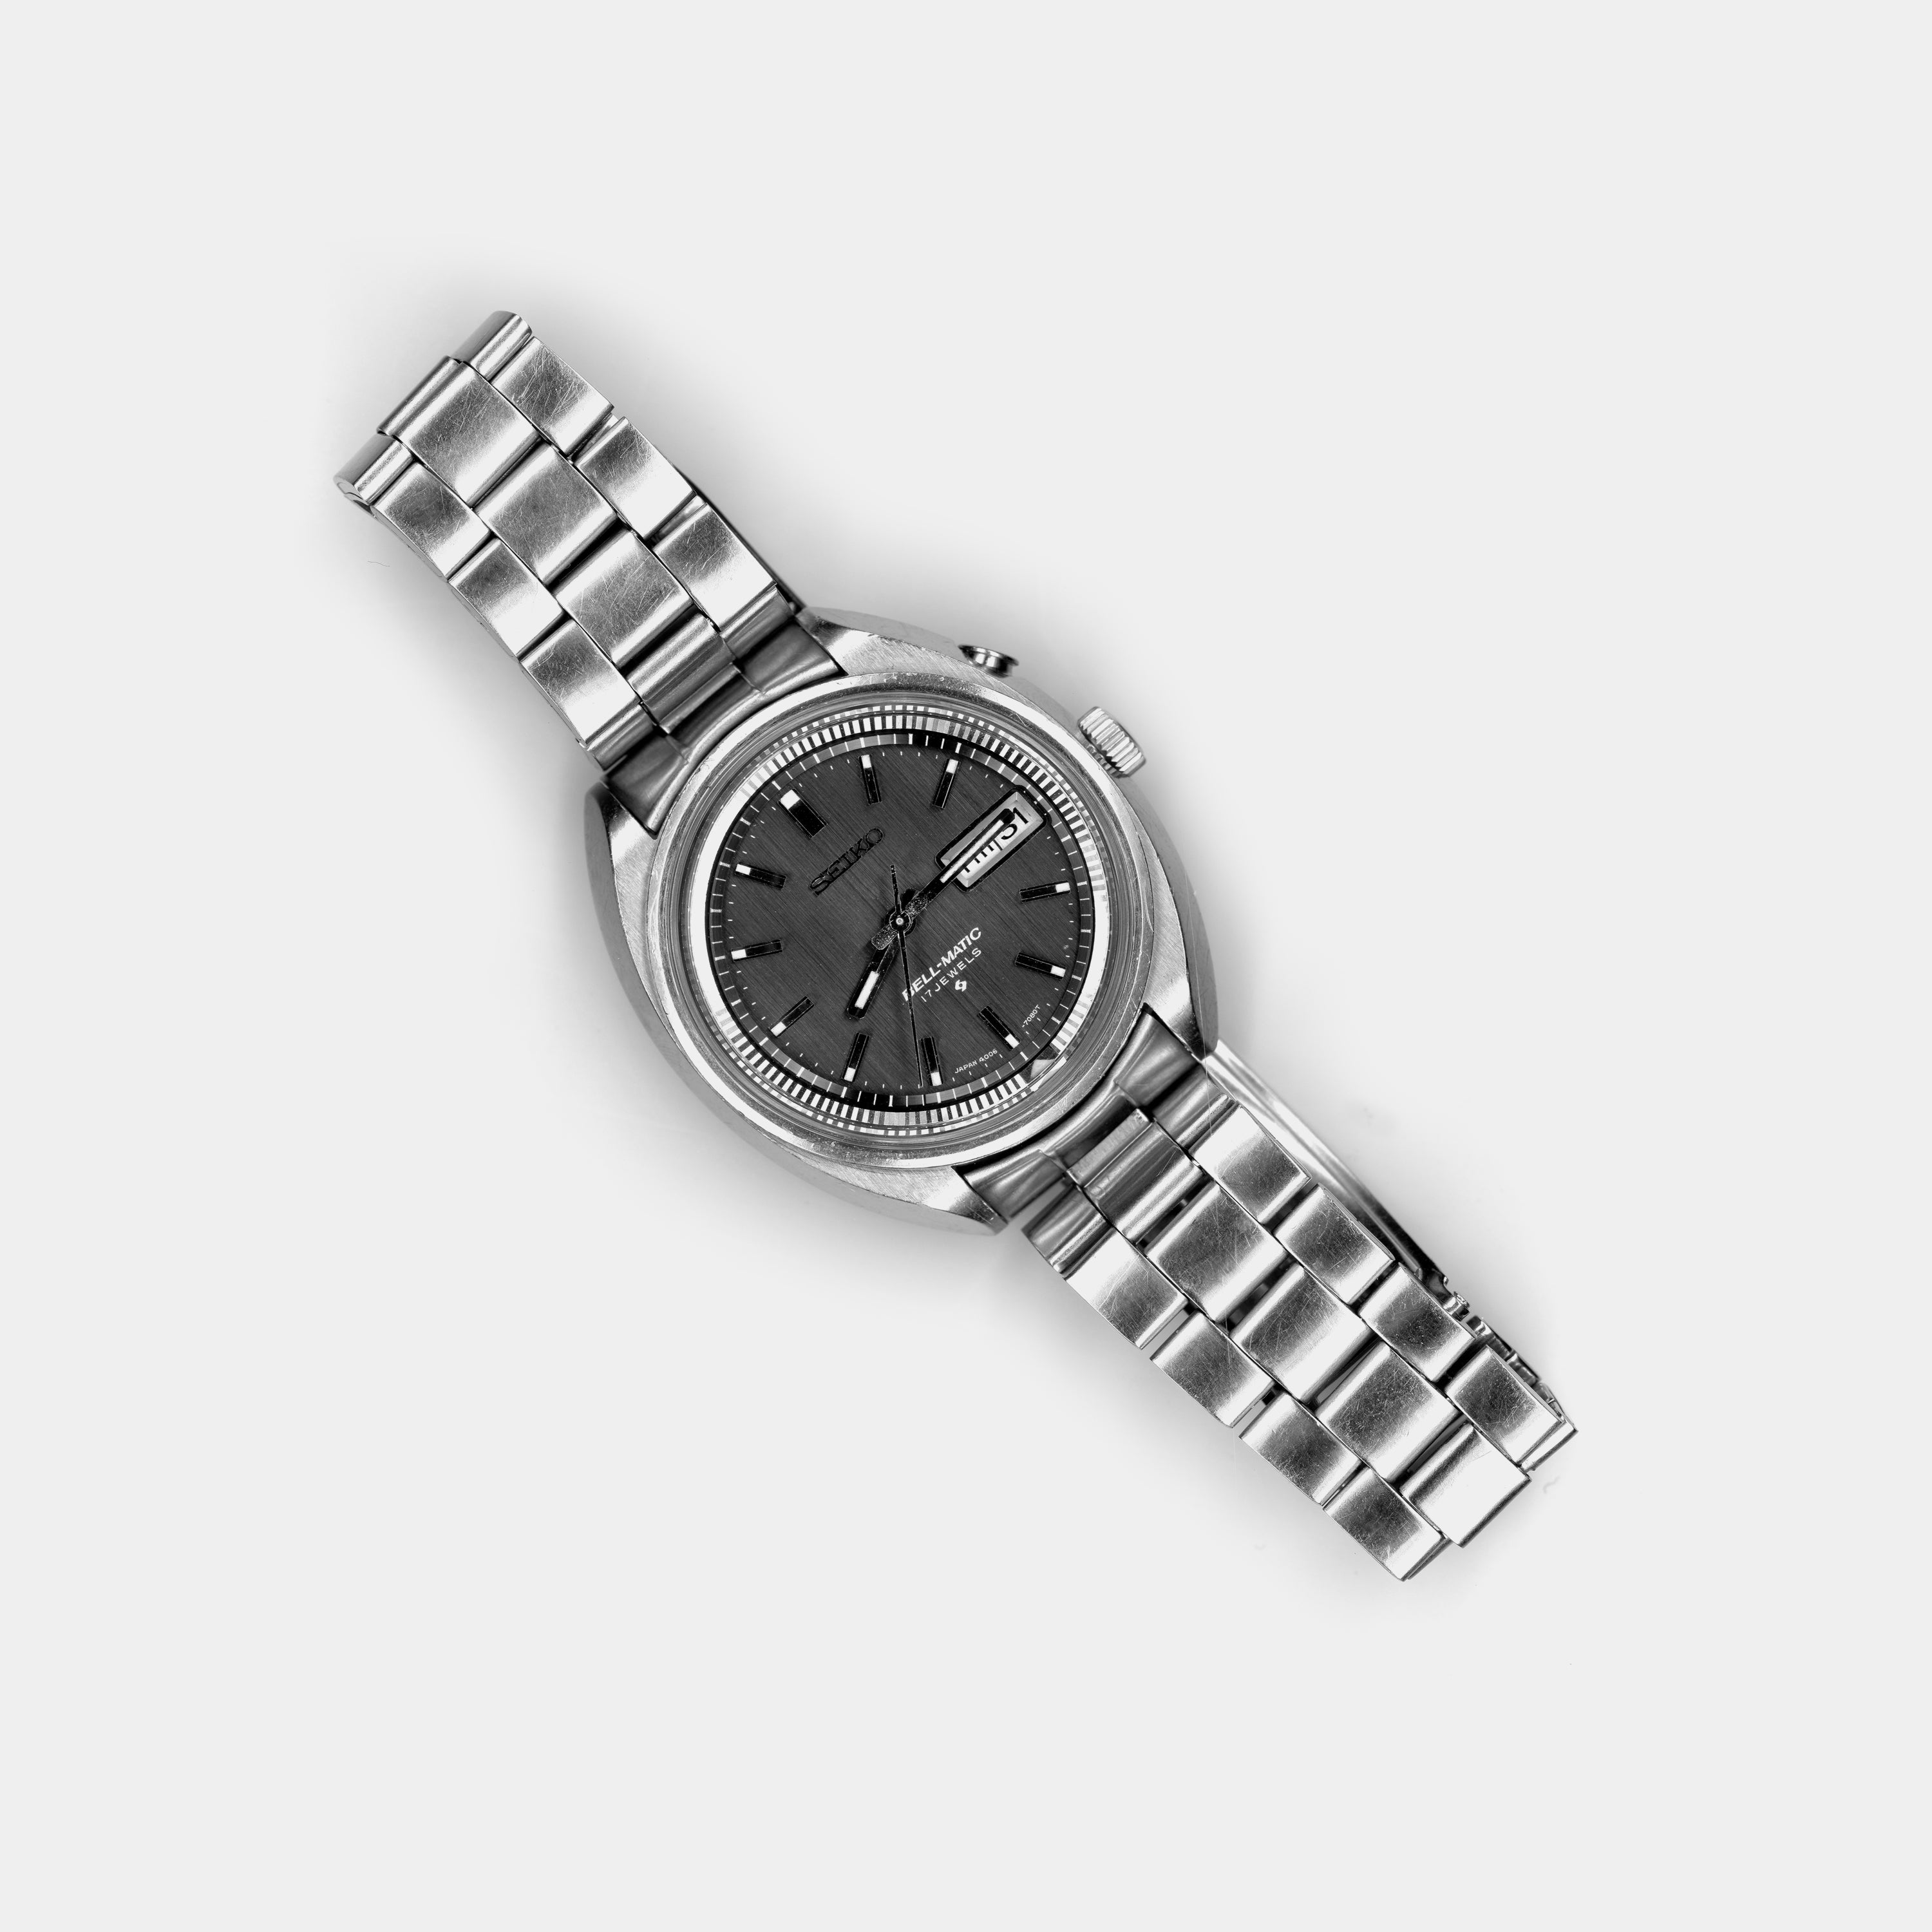 Seiko Bell-Matic Alarm Ref. 4006-7000 Brushed Grey Dial Circa 1969 Wristwatch